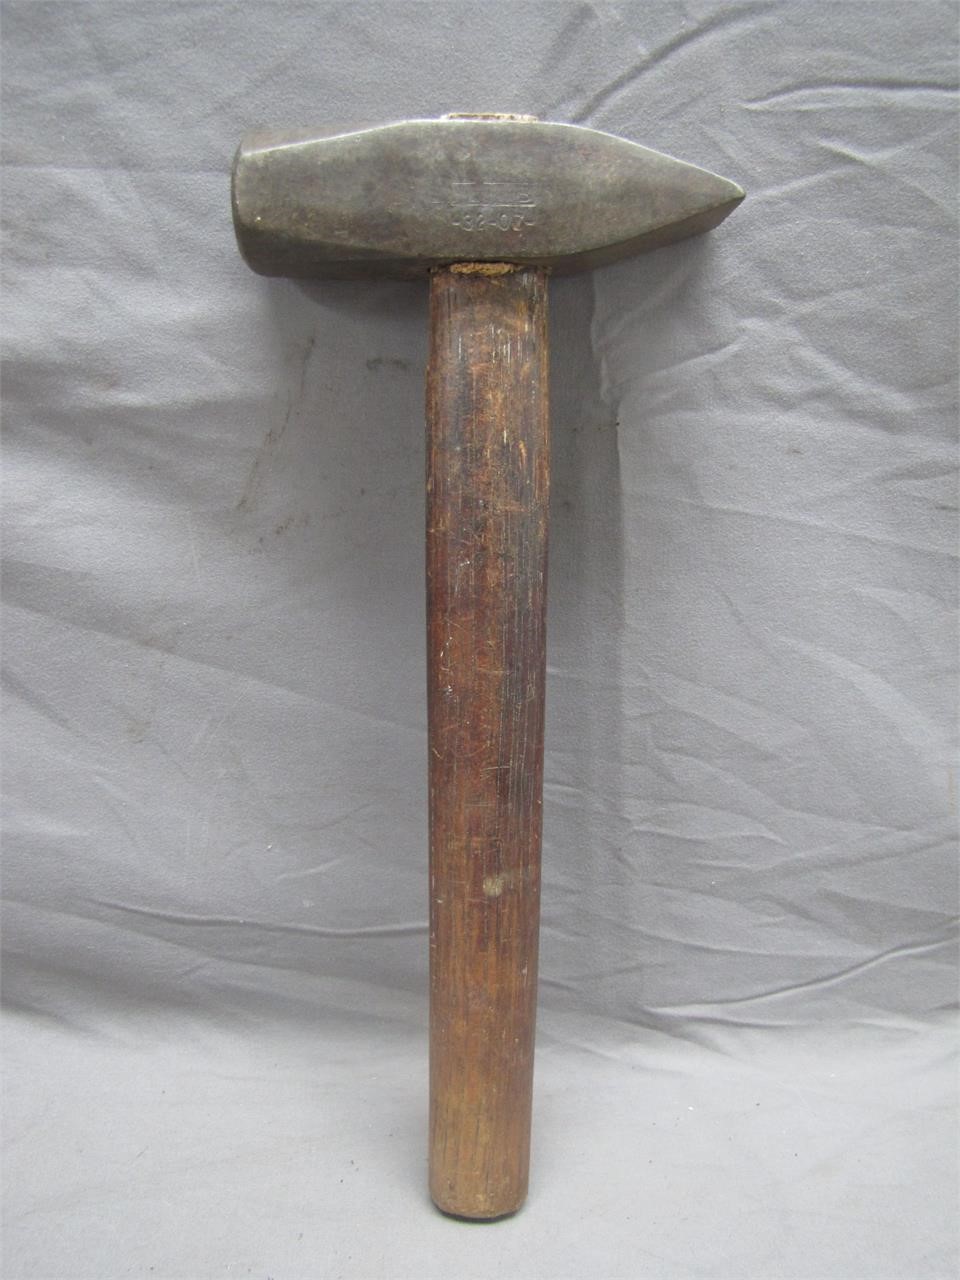 Vintage Cross Peen Blacksmith Hammer